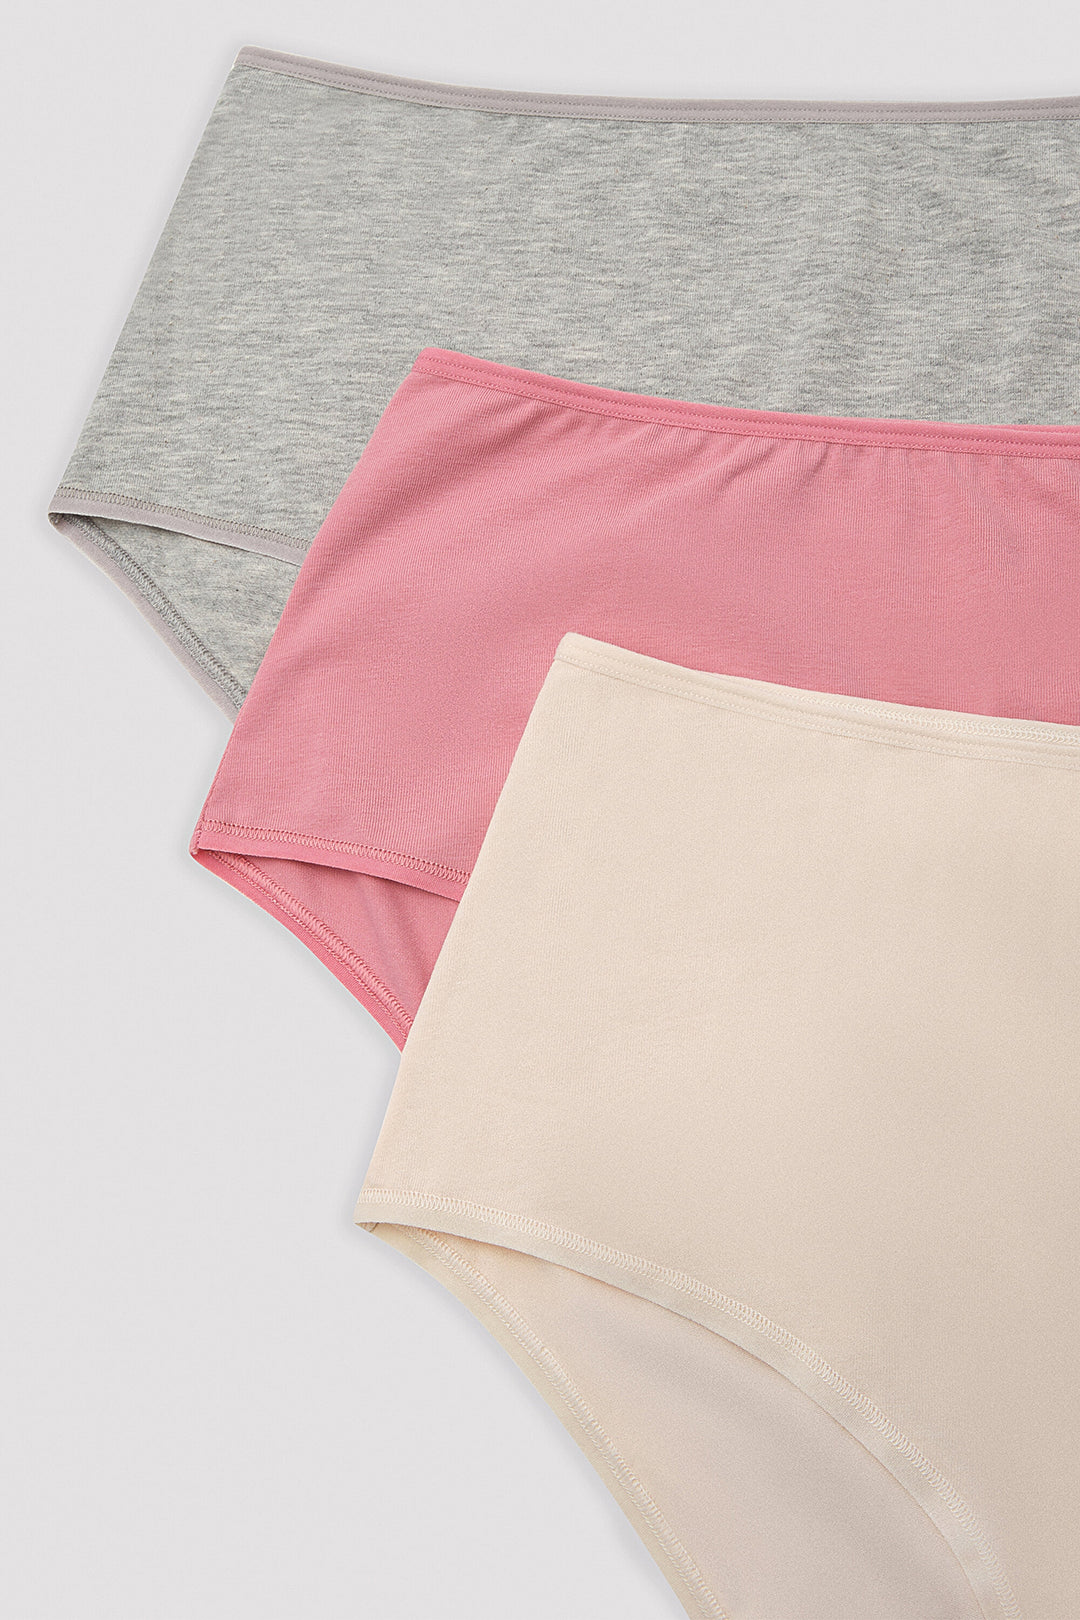 Soft Color 3-Piece High Waist Multi-Colored Slip Panties